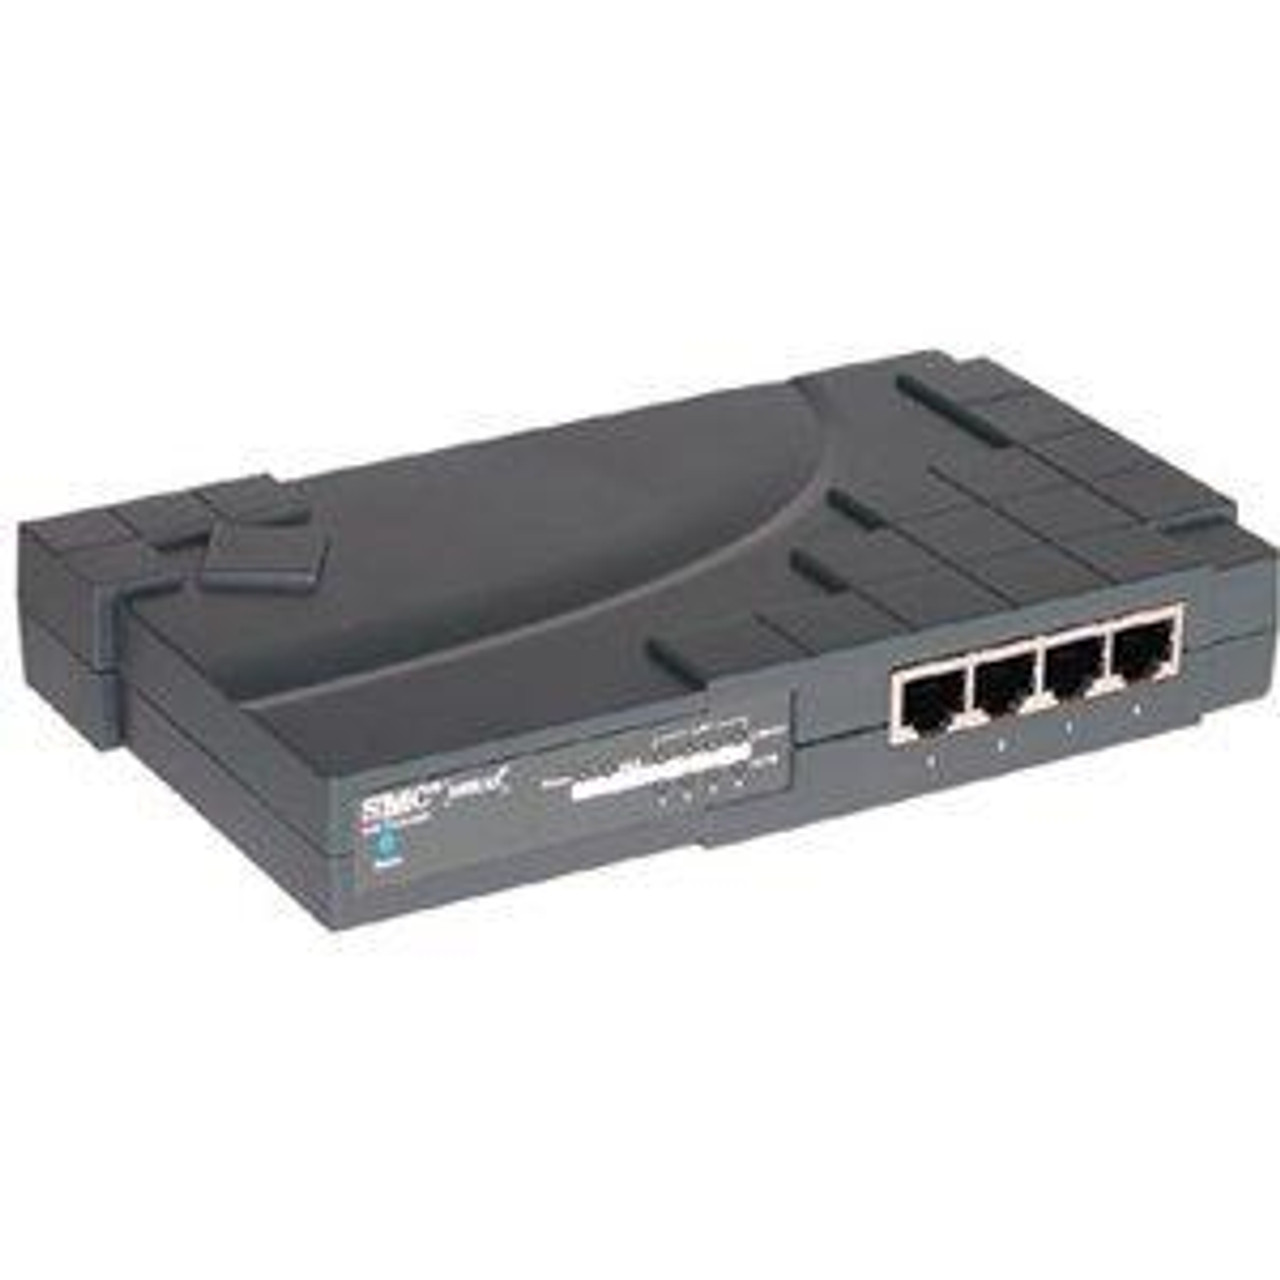 SMC7004BR SMC Barricade SMC7004ABR Broadband Router 4 x 10/100Base-TX LAN 1 x 10/100Base-TX WAN 1 x ISDN BRI 1 x Printer (Refurbished)